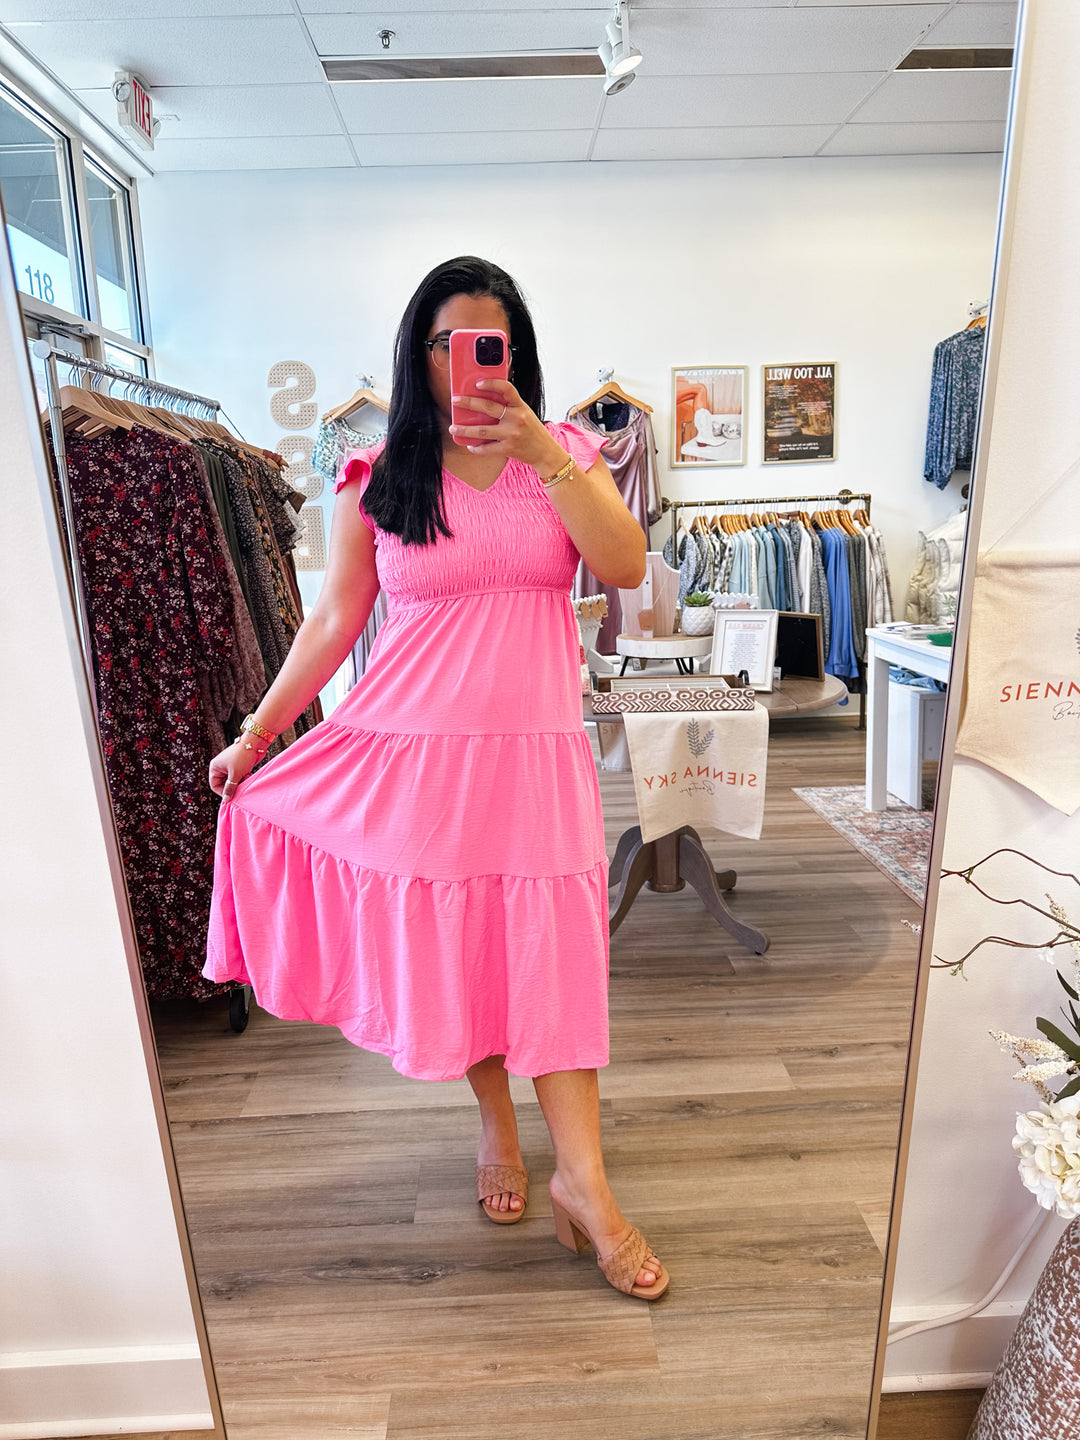 Giannina Midi Dress - Sienna Sky Boutique